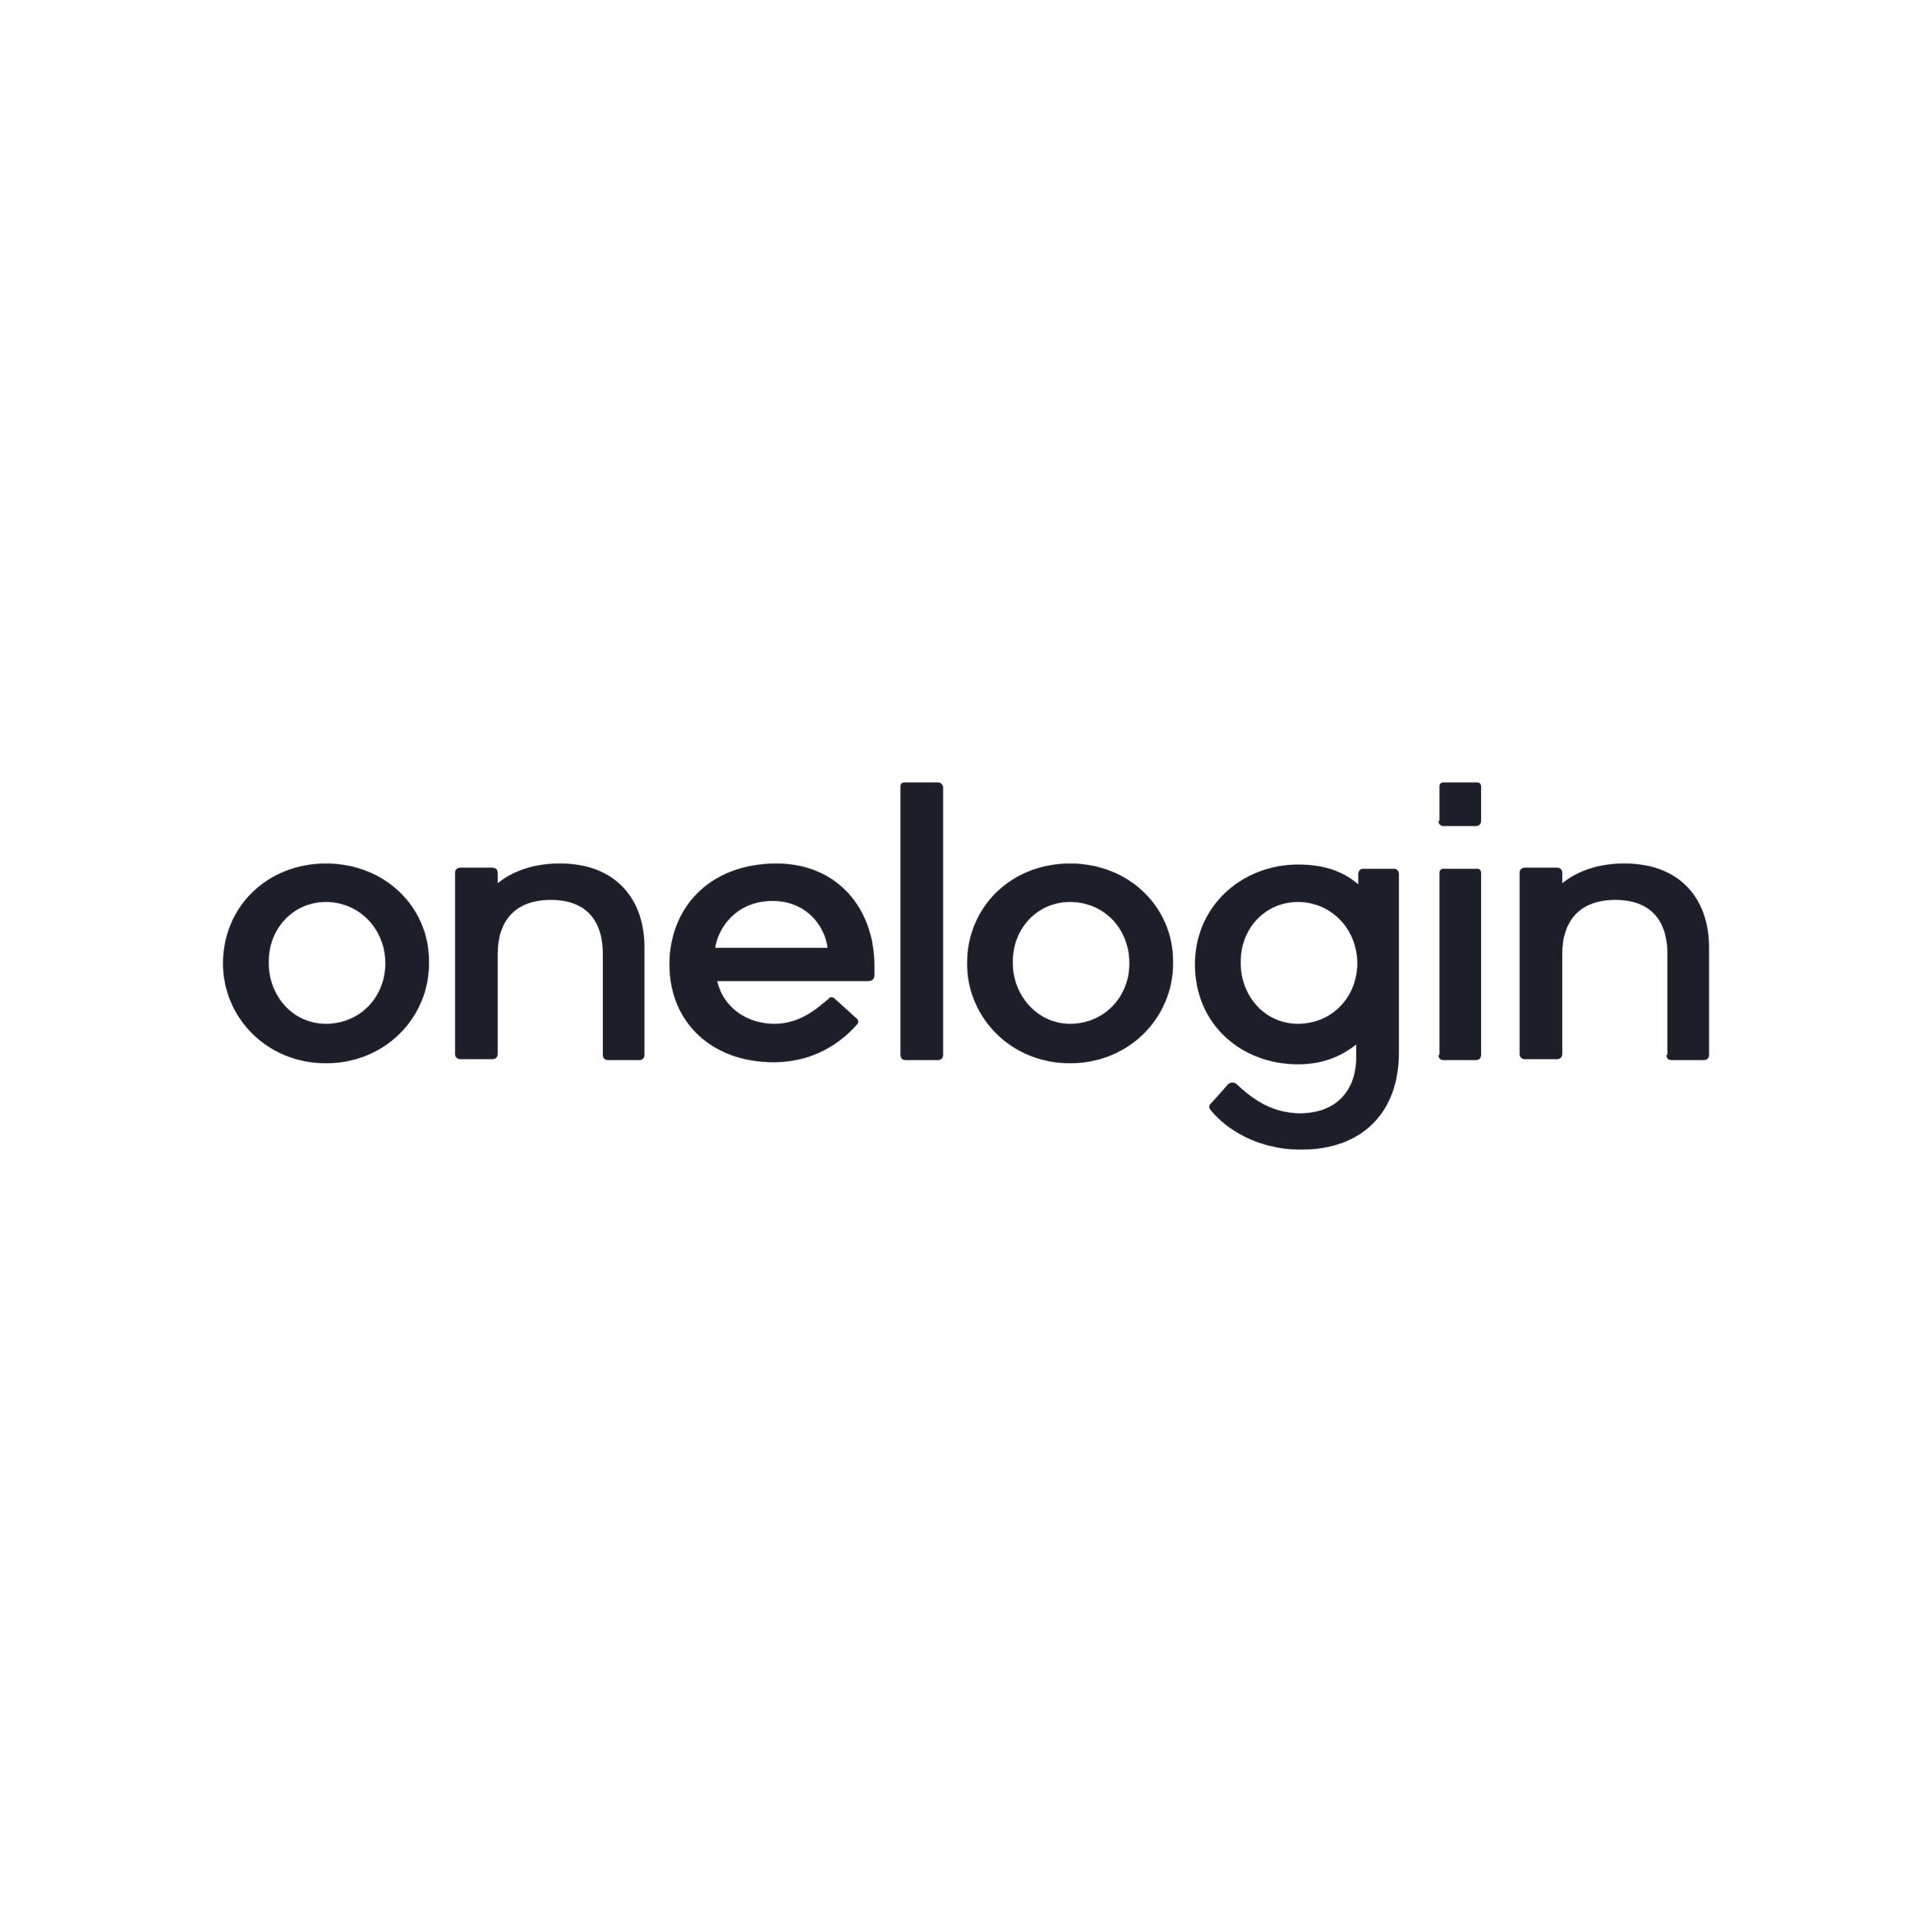 OneLogin IPO